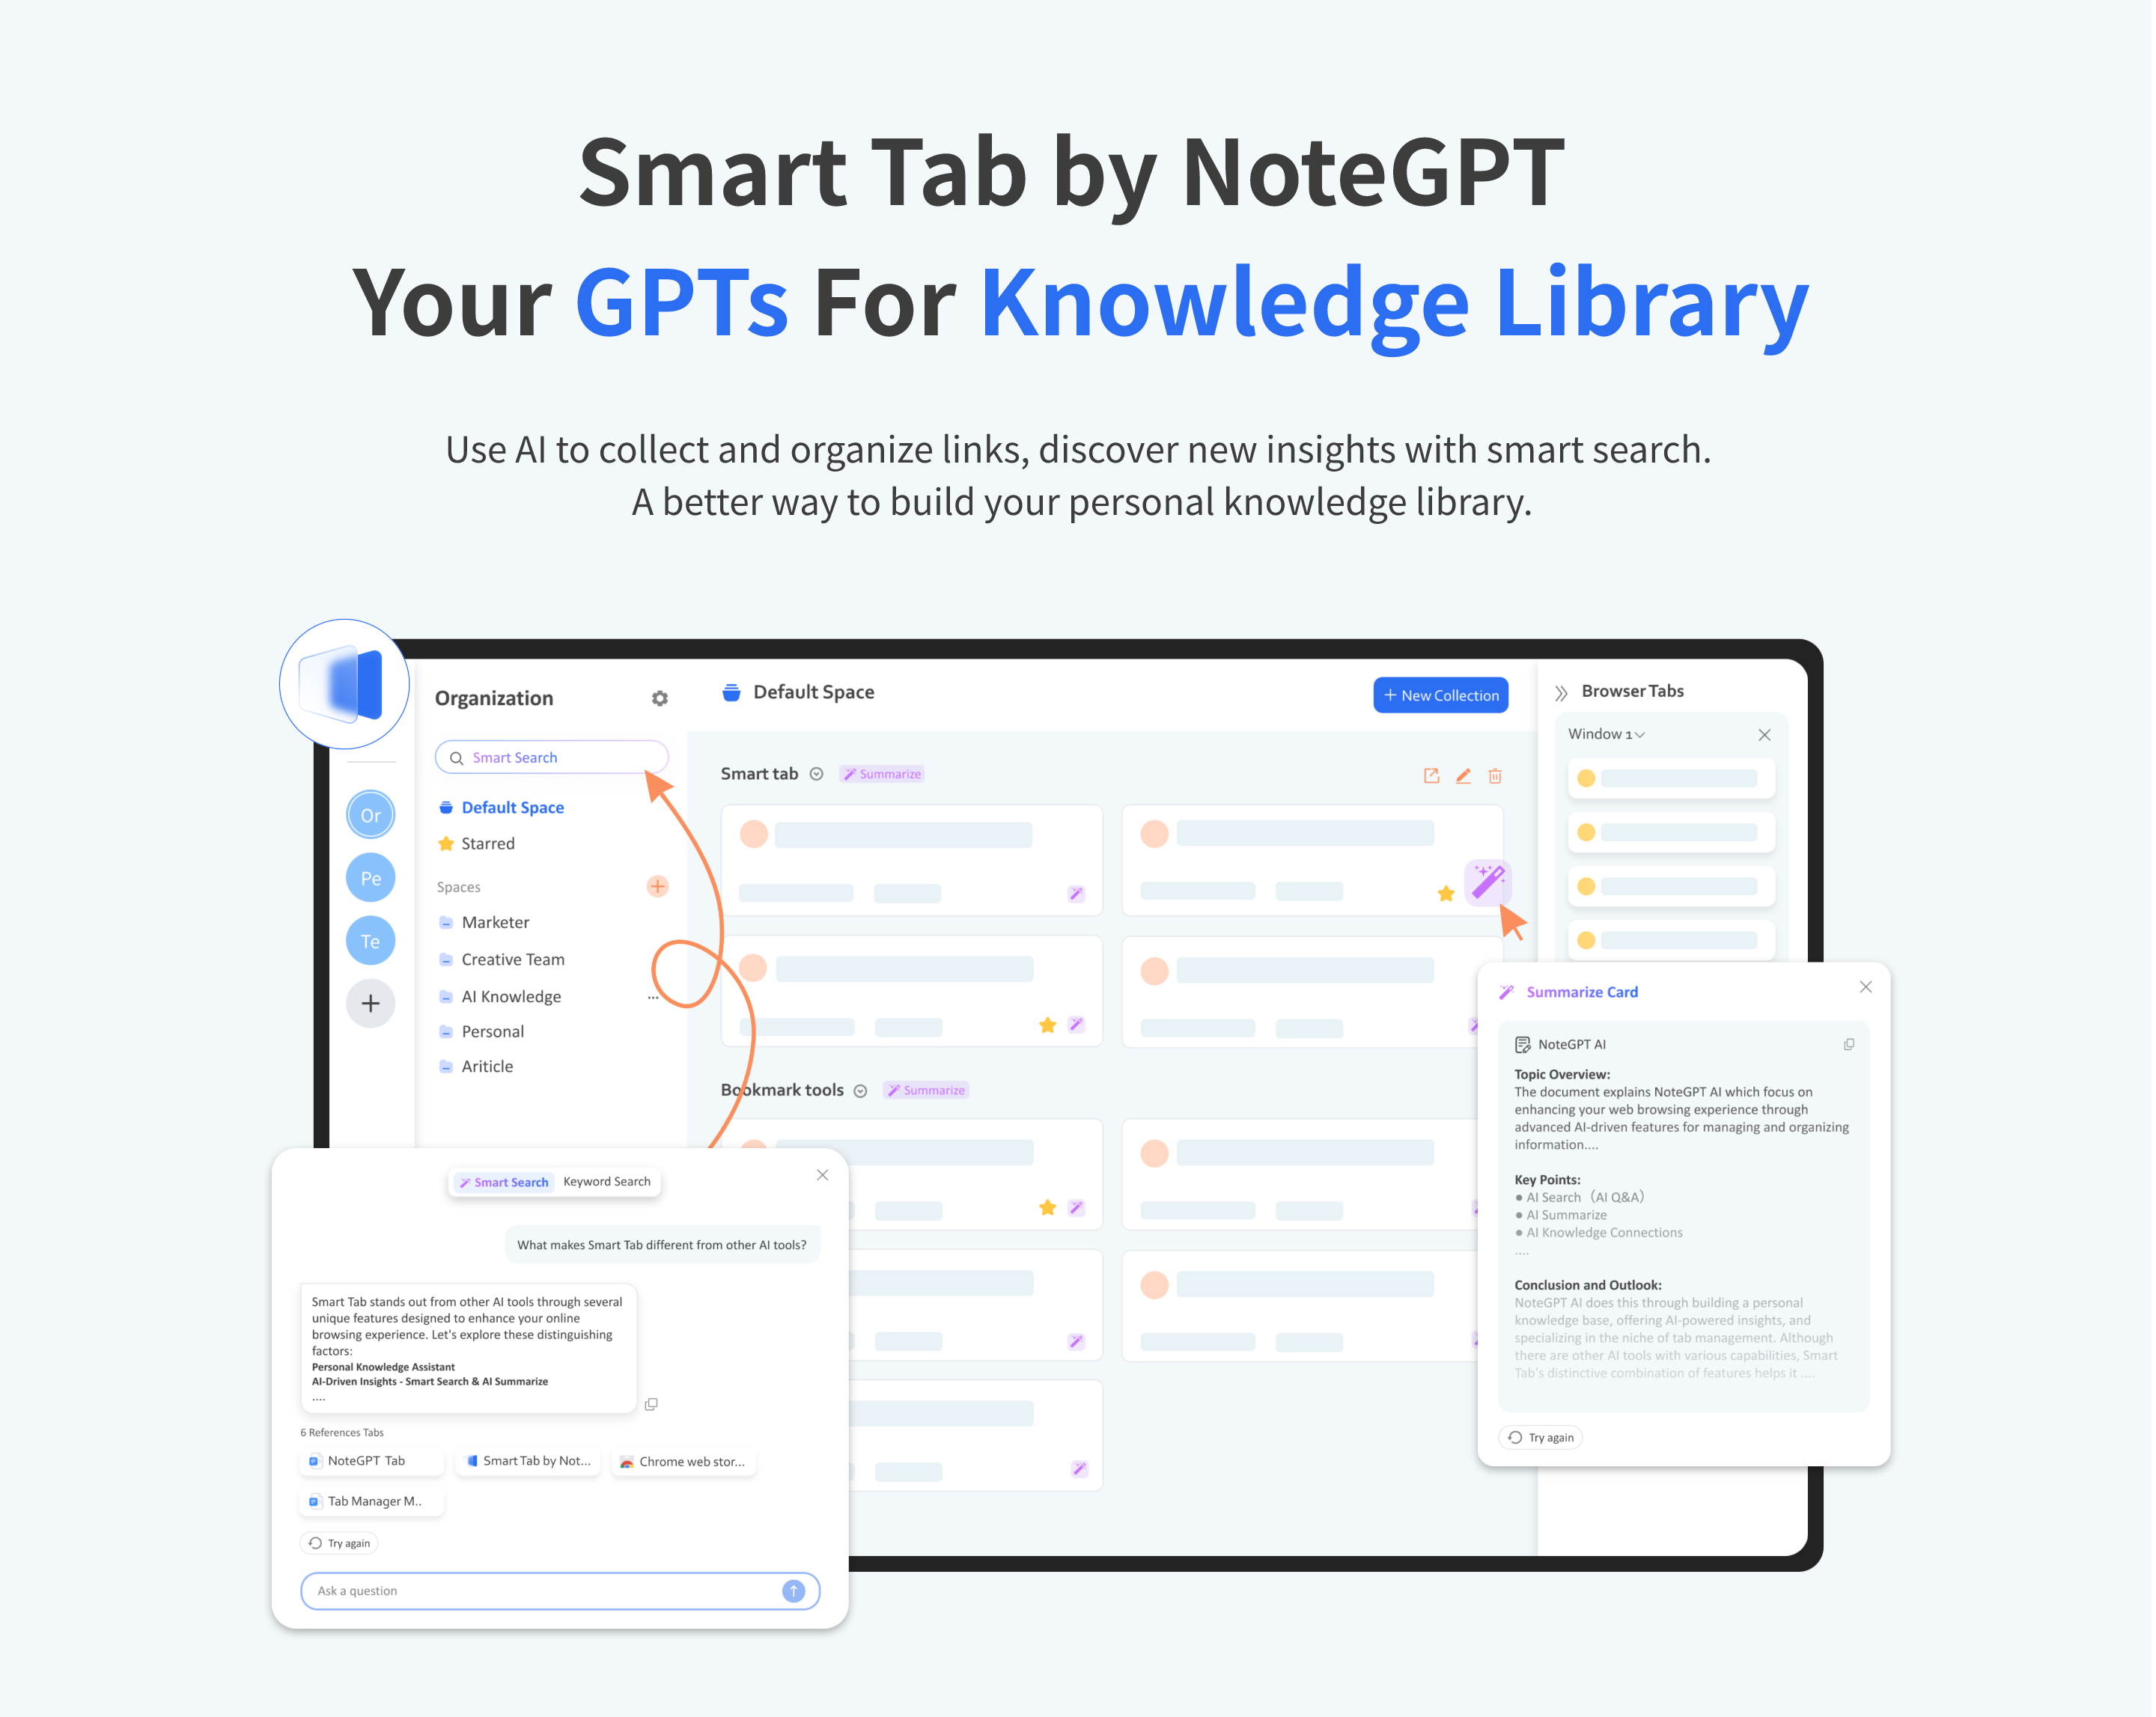 GPTs，NoteGPT，Smart Tab, AI copilot